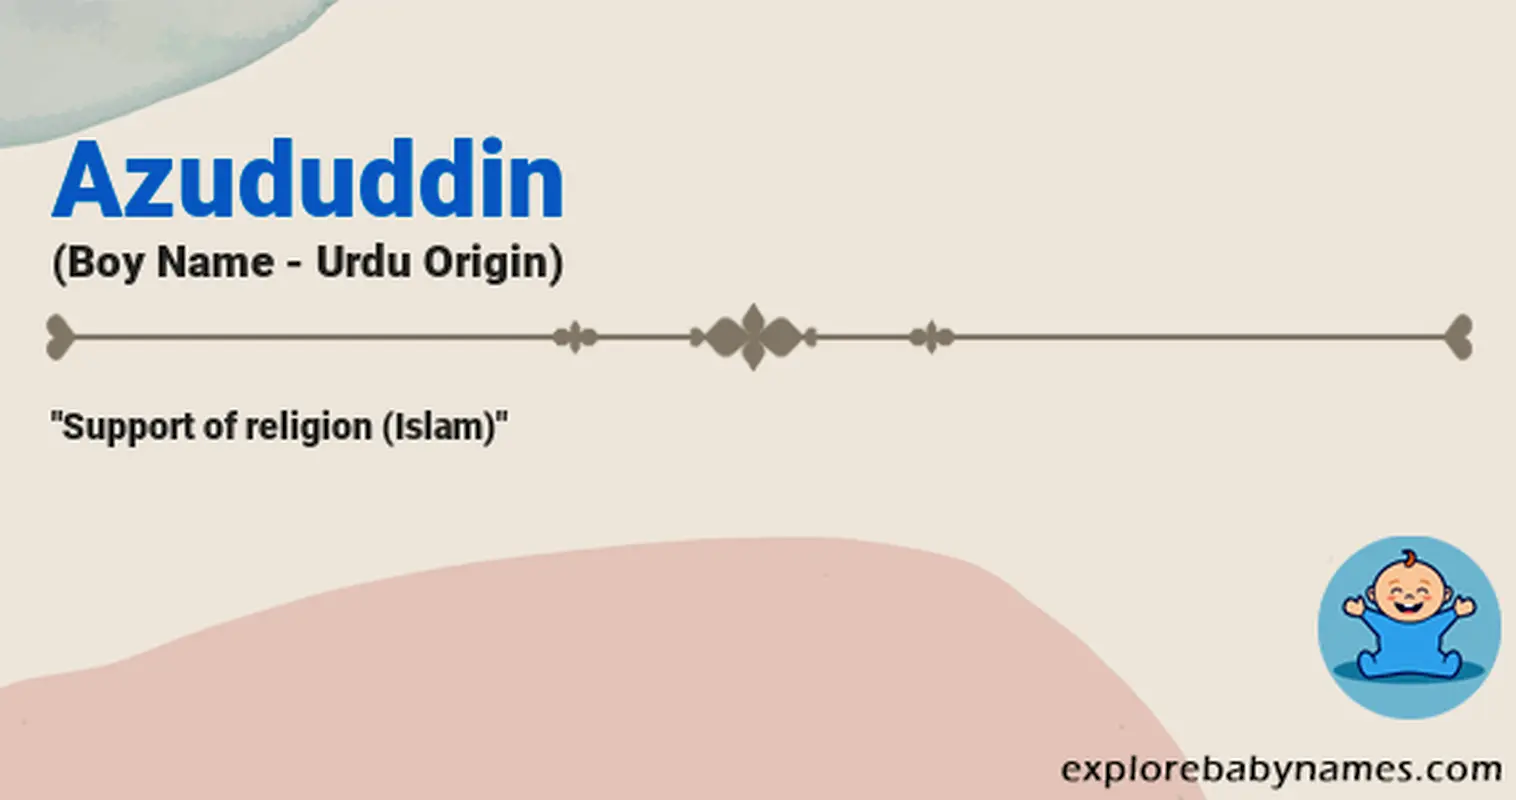 Meaning of Azududdin